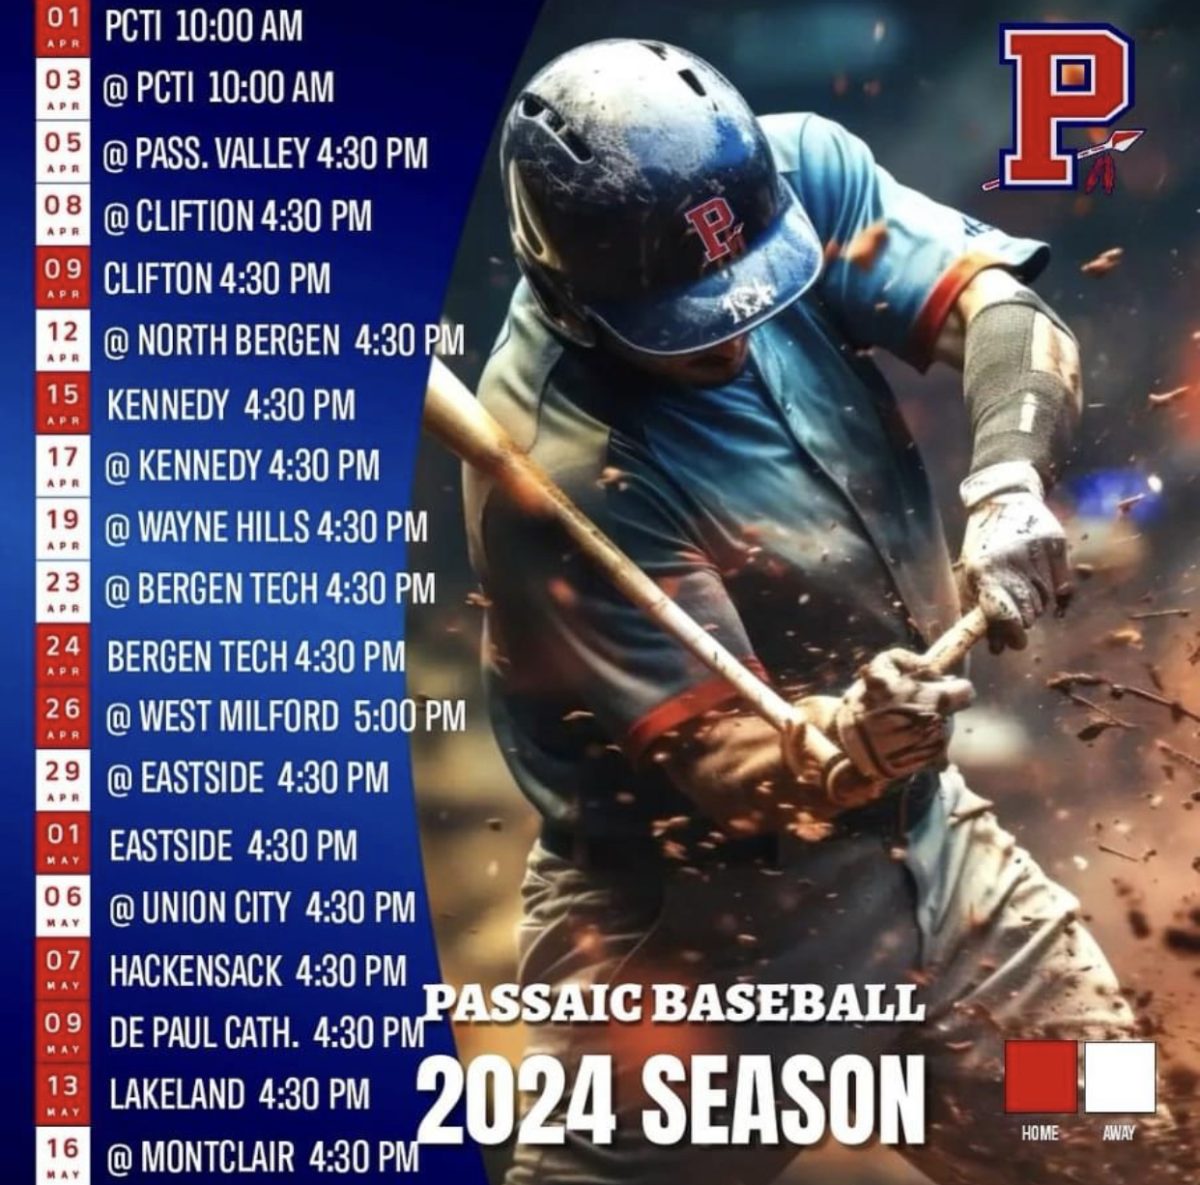 Passaic High School Baseball Team Reveals Highly Anticipated Season Schedule!